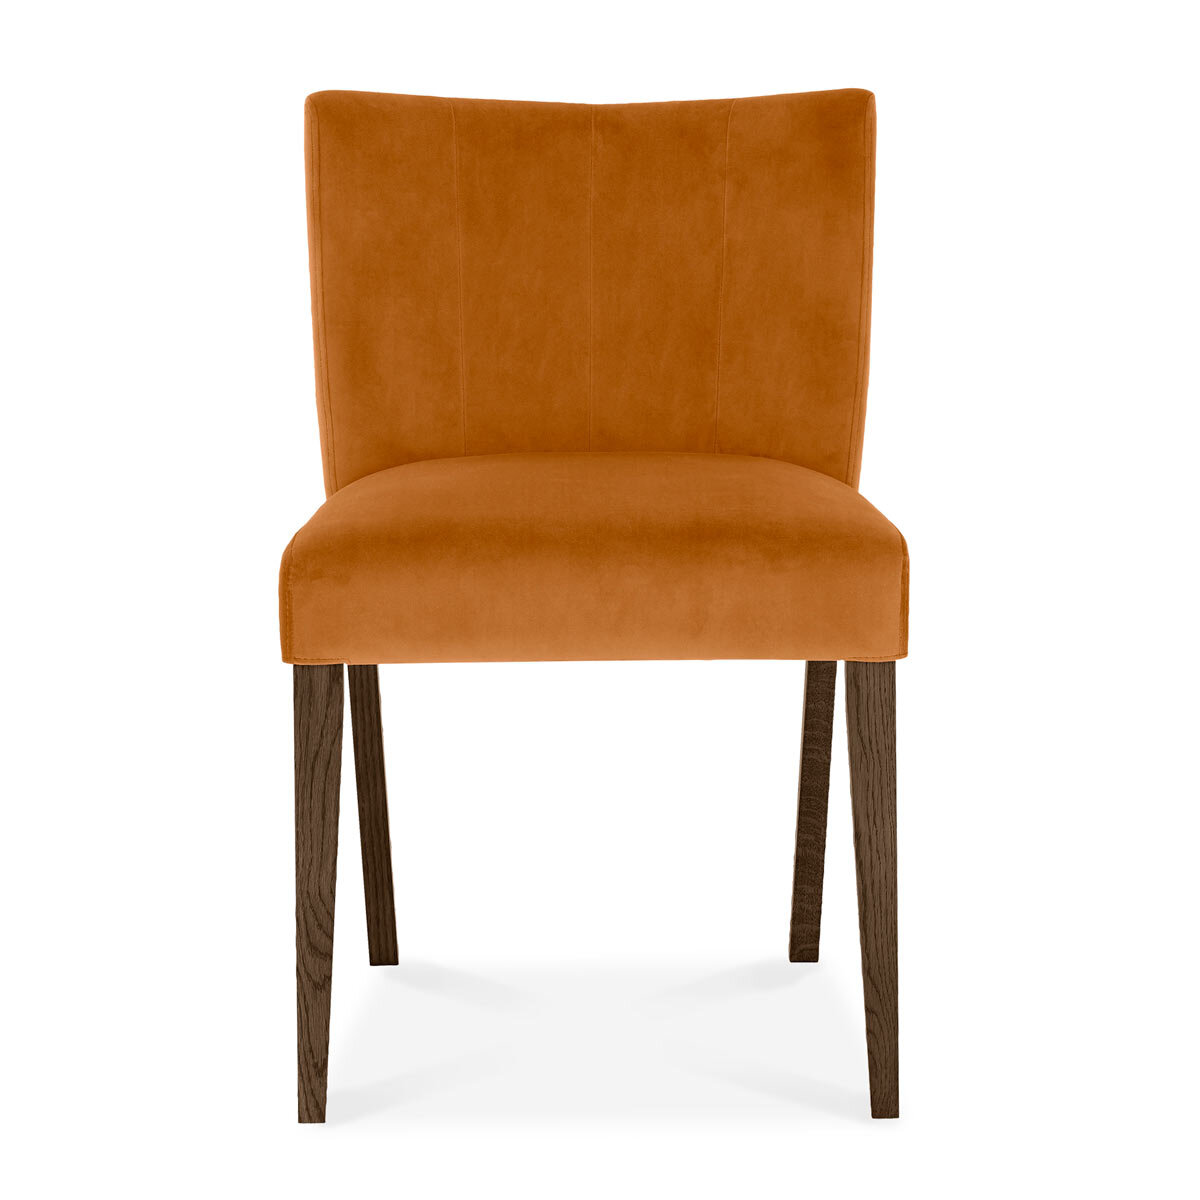 Bentley Designs Milan Low Back Orange Velvet Dining Chair, 2 Pack